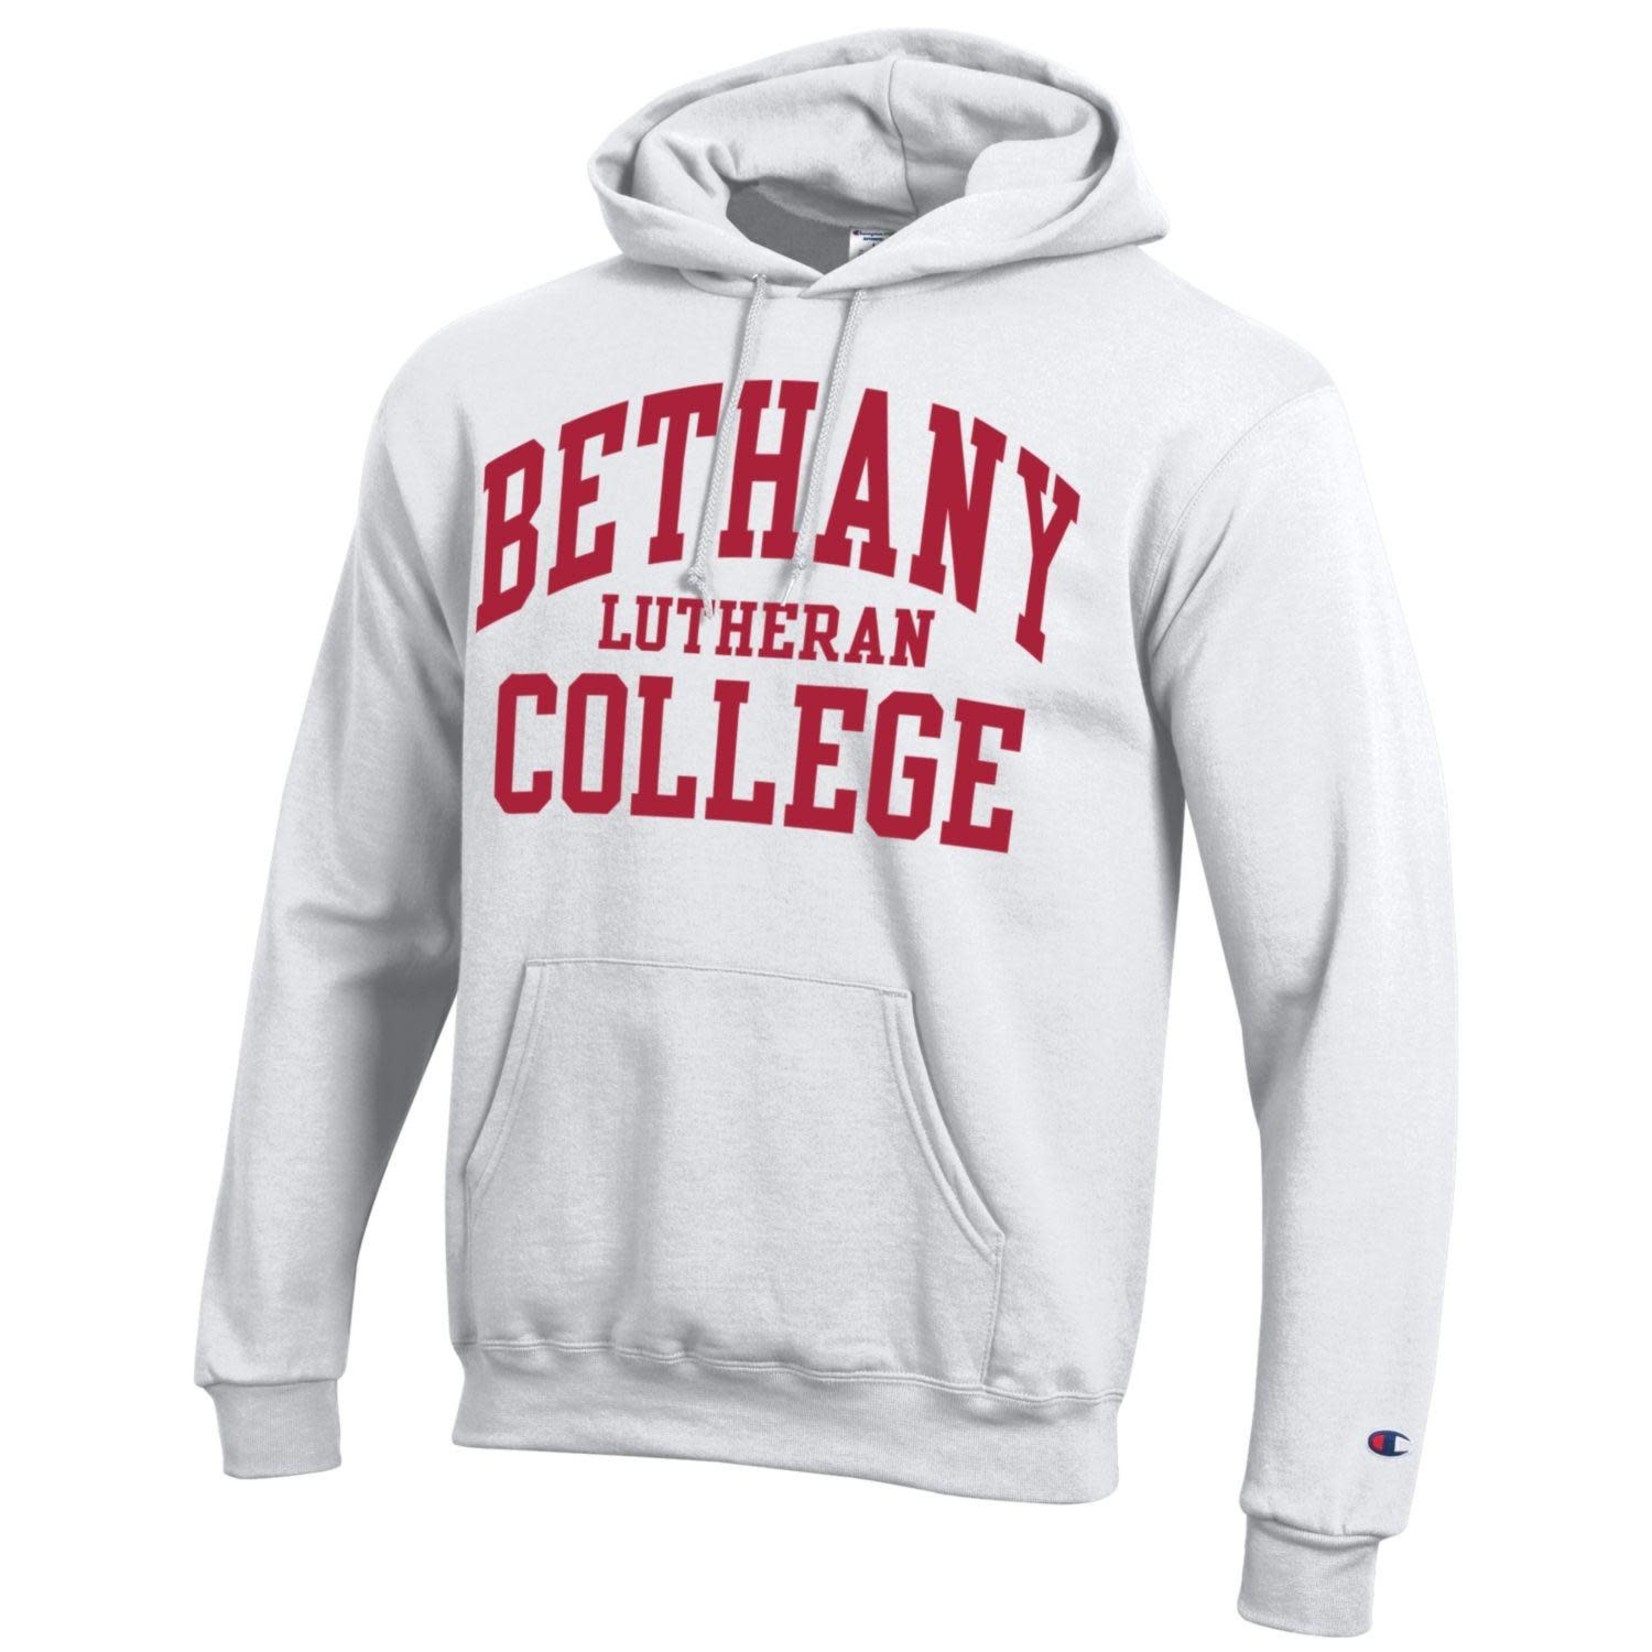 Champion Champion Bethany Lutheran College Hooded Sweatshirt